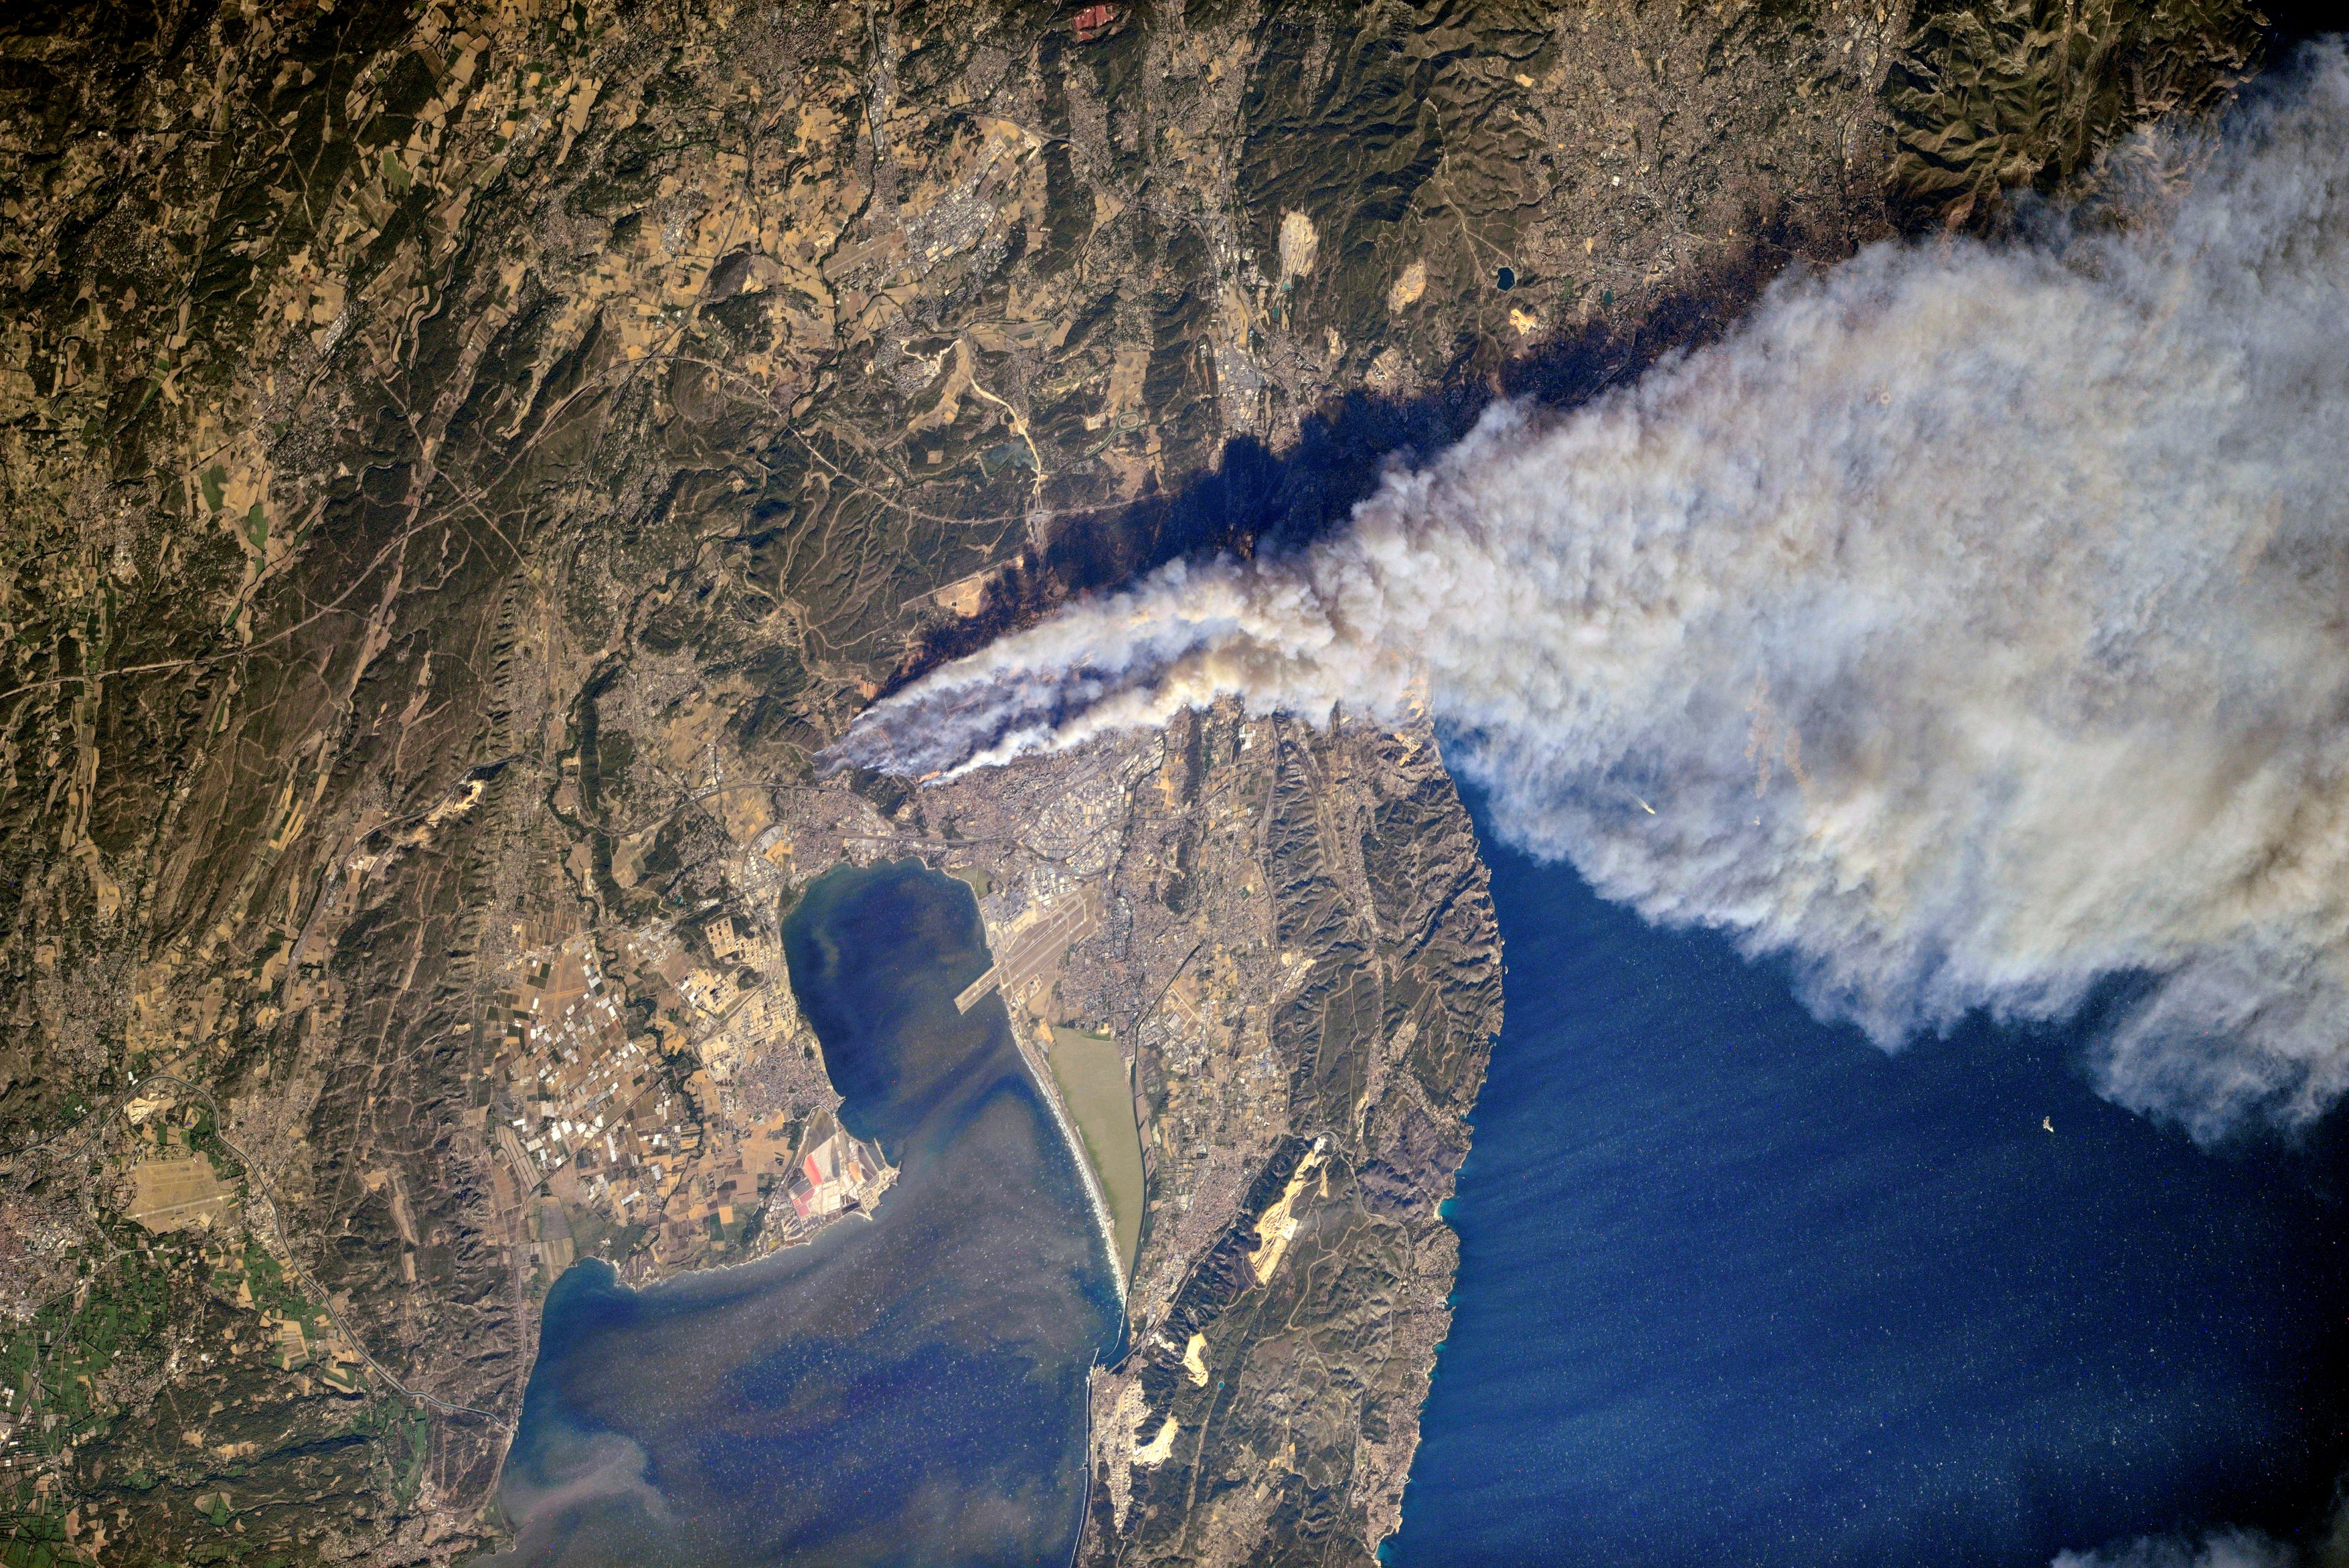 Incendies Marseille Vitrolles Etang de Berre - Les Pennes-Mirabeau - Août 2016 - Station Spatiale Internationale - ISS - Fire - Roscosmos - Oleg Skripochka